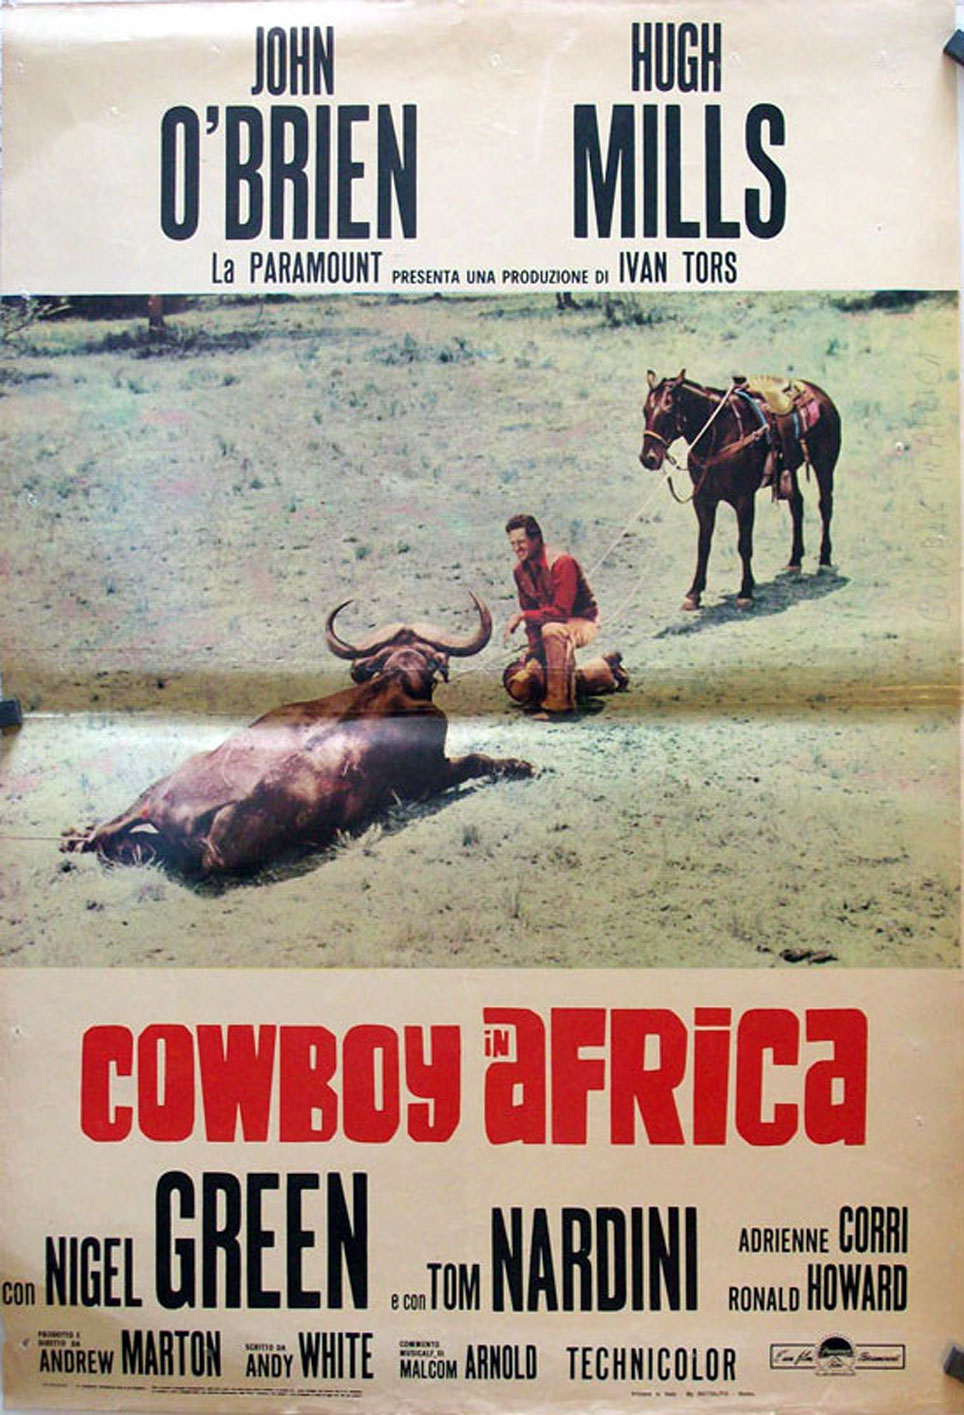 COWBOY IN AFRICA